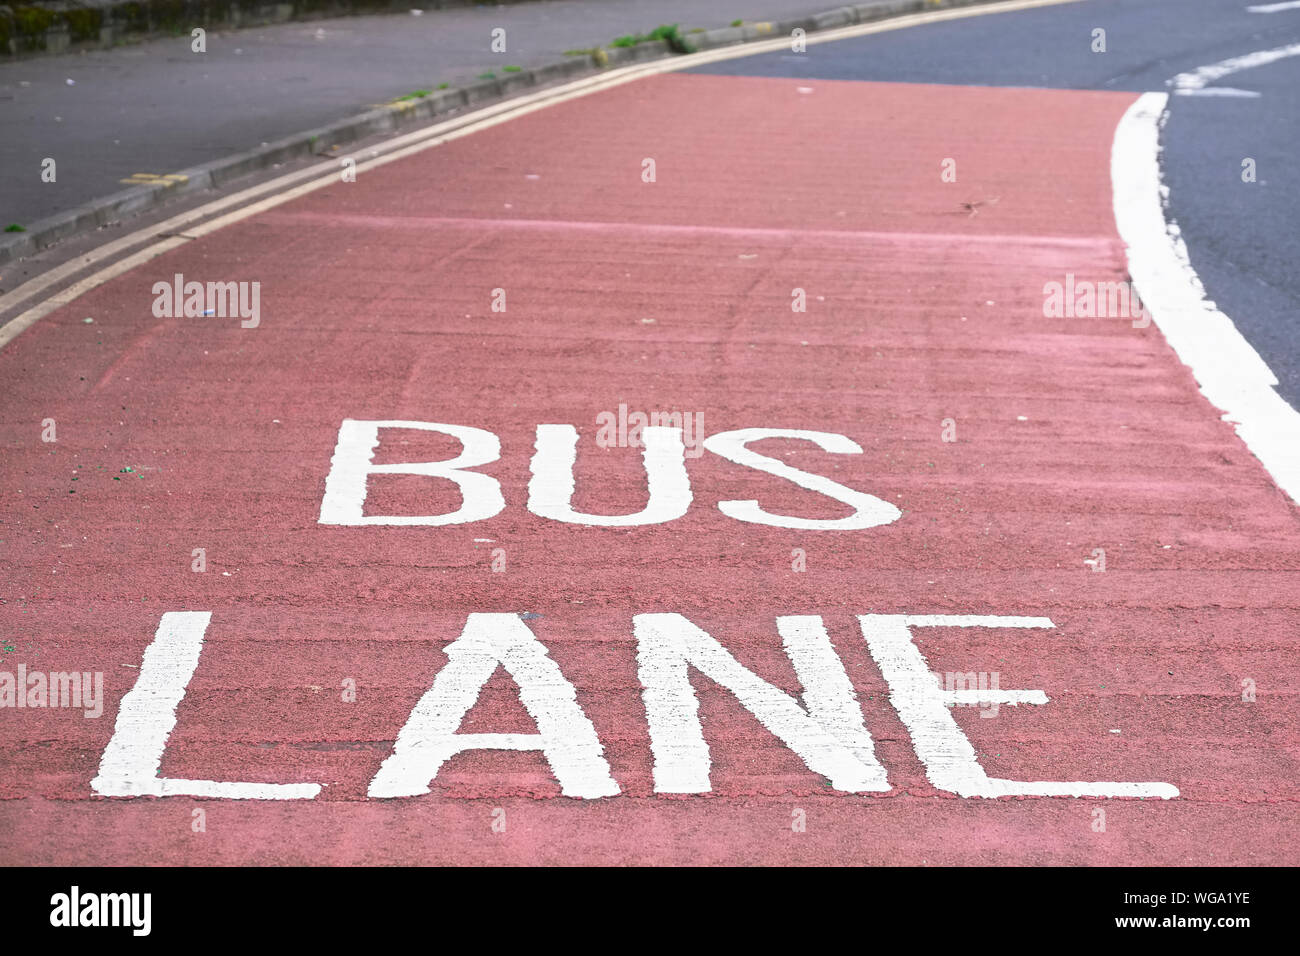 Bus lane sign text on road asphalt uk Stock Photo